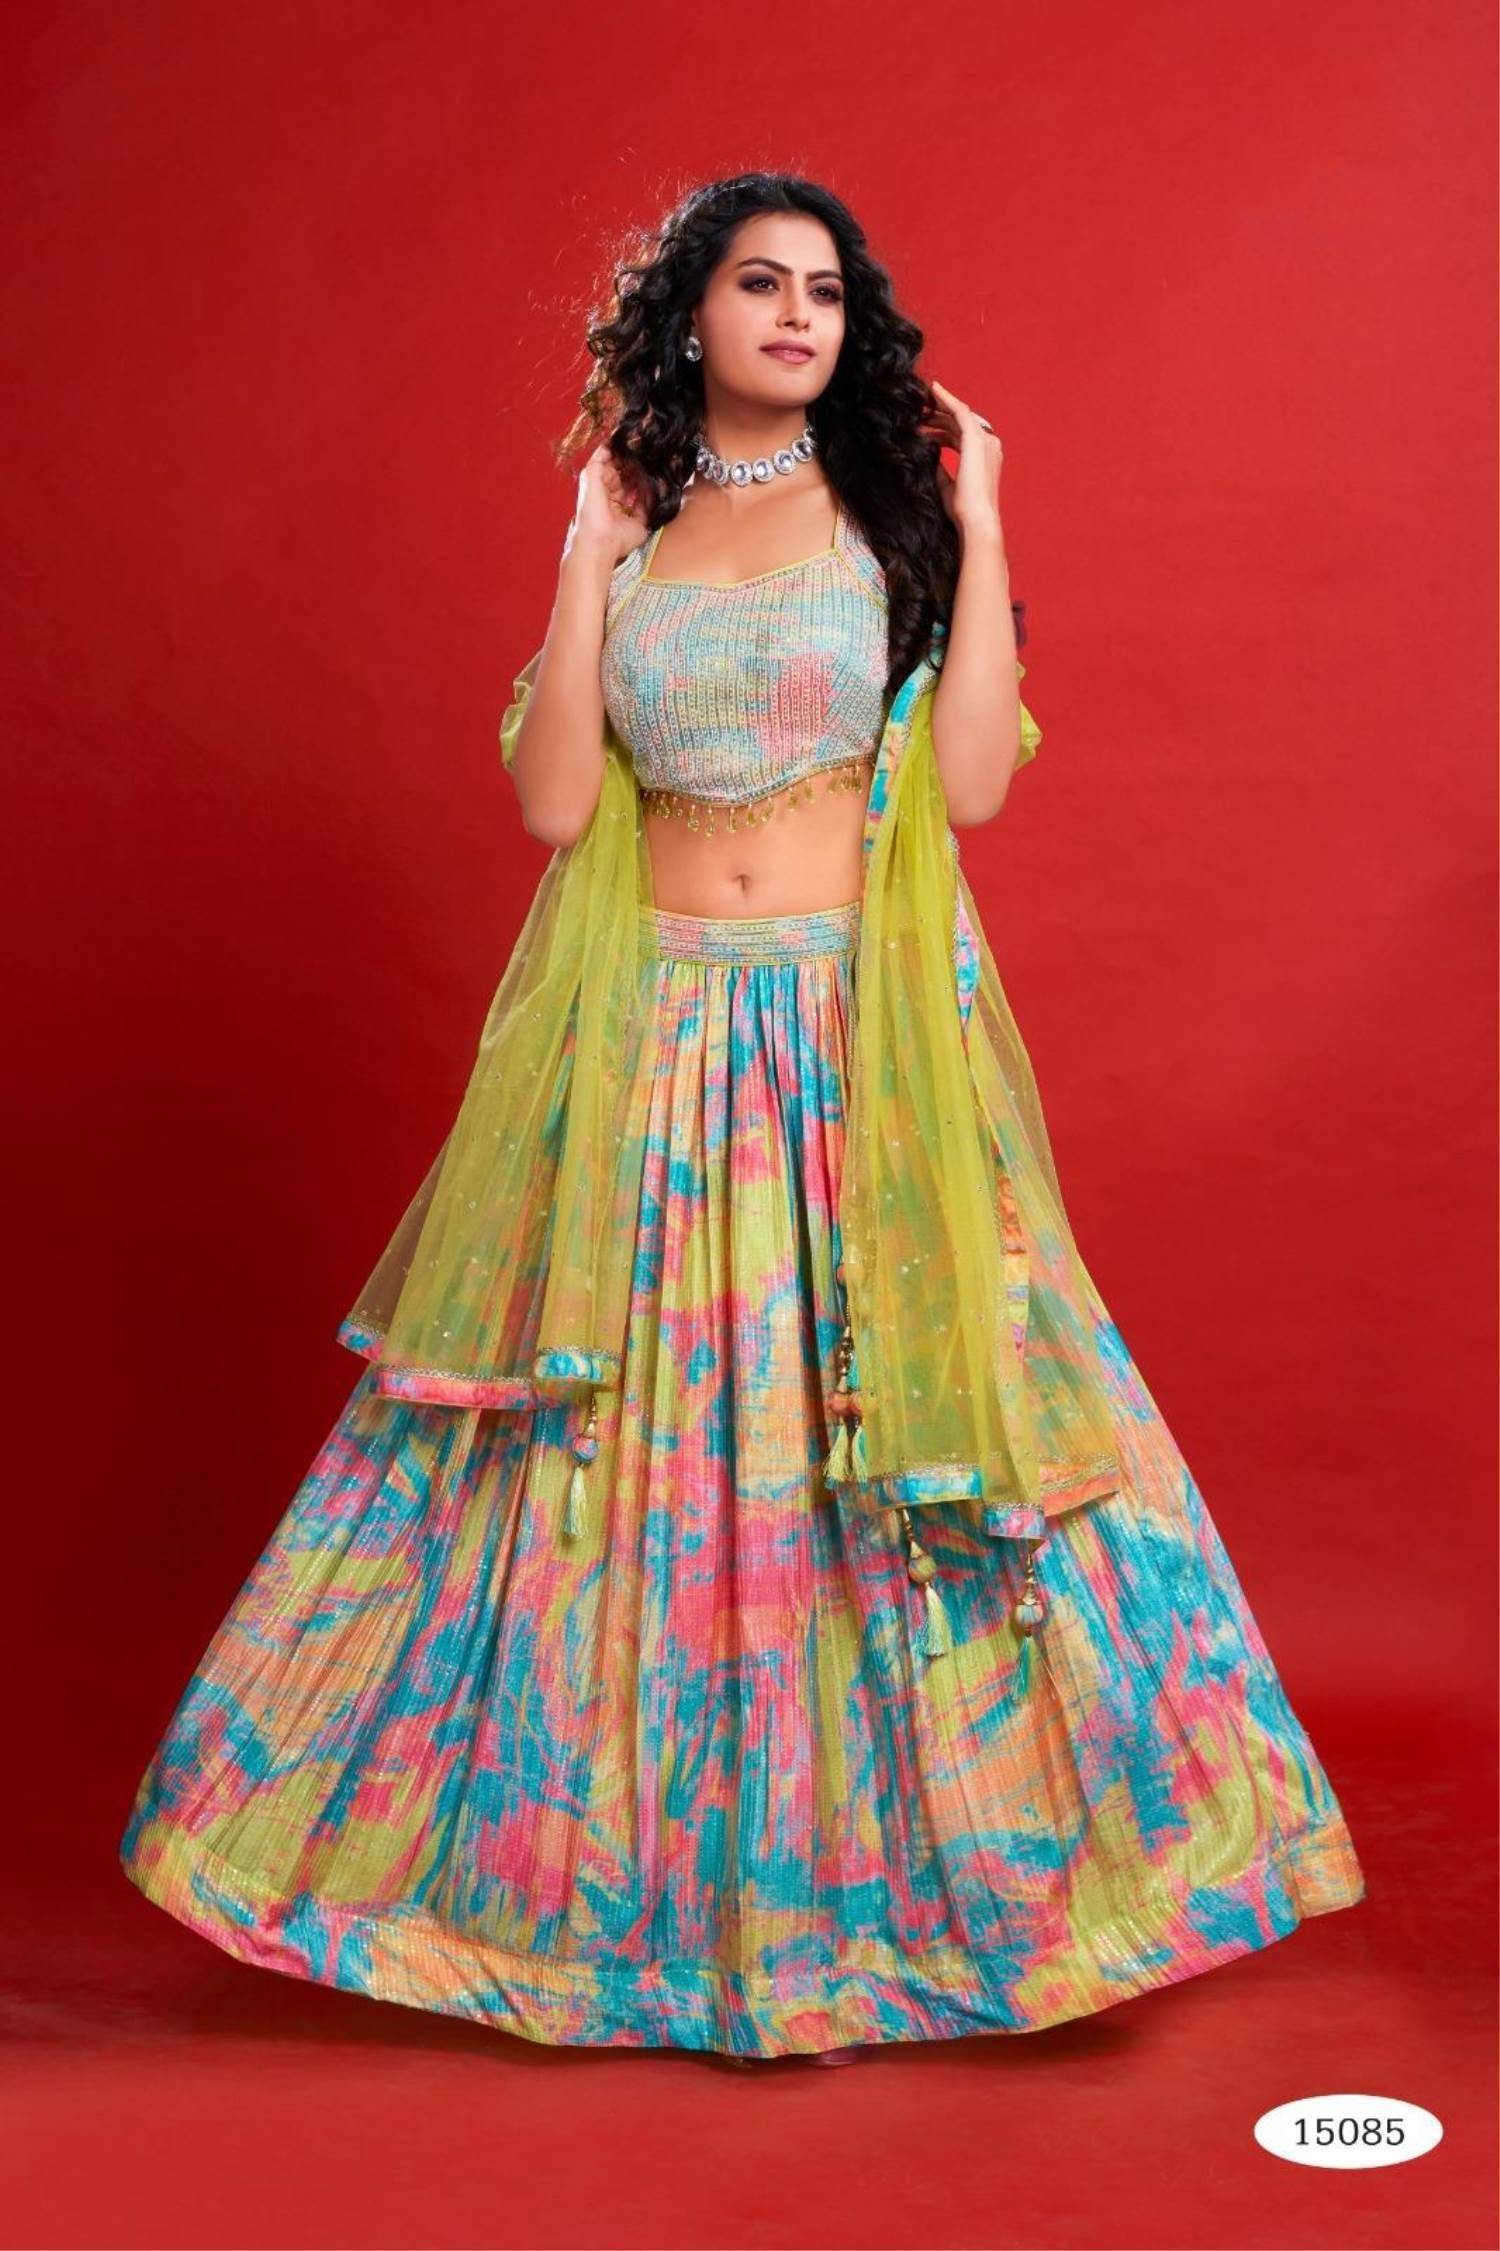 Wedding Lehenga Choli for Women Designer Multi Colored Bollywood